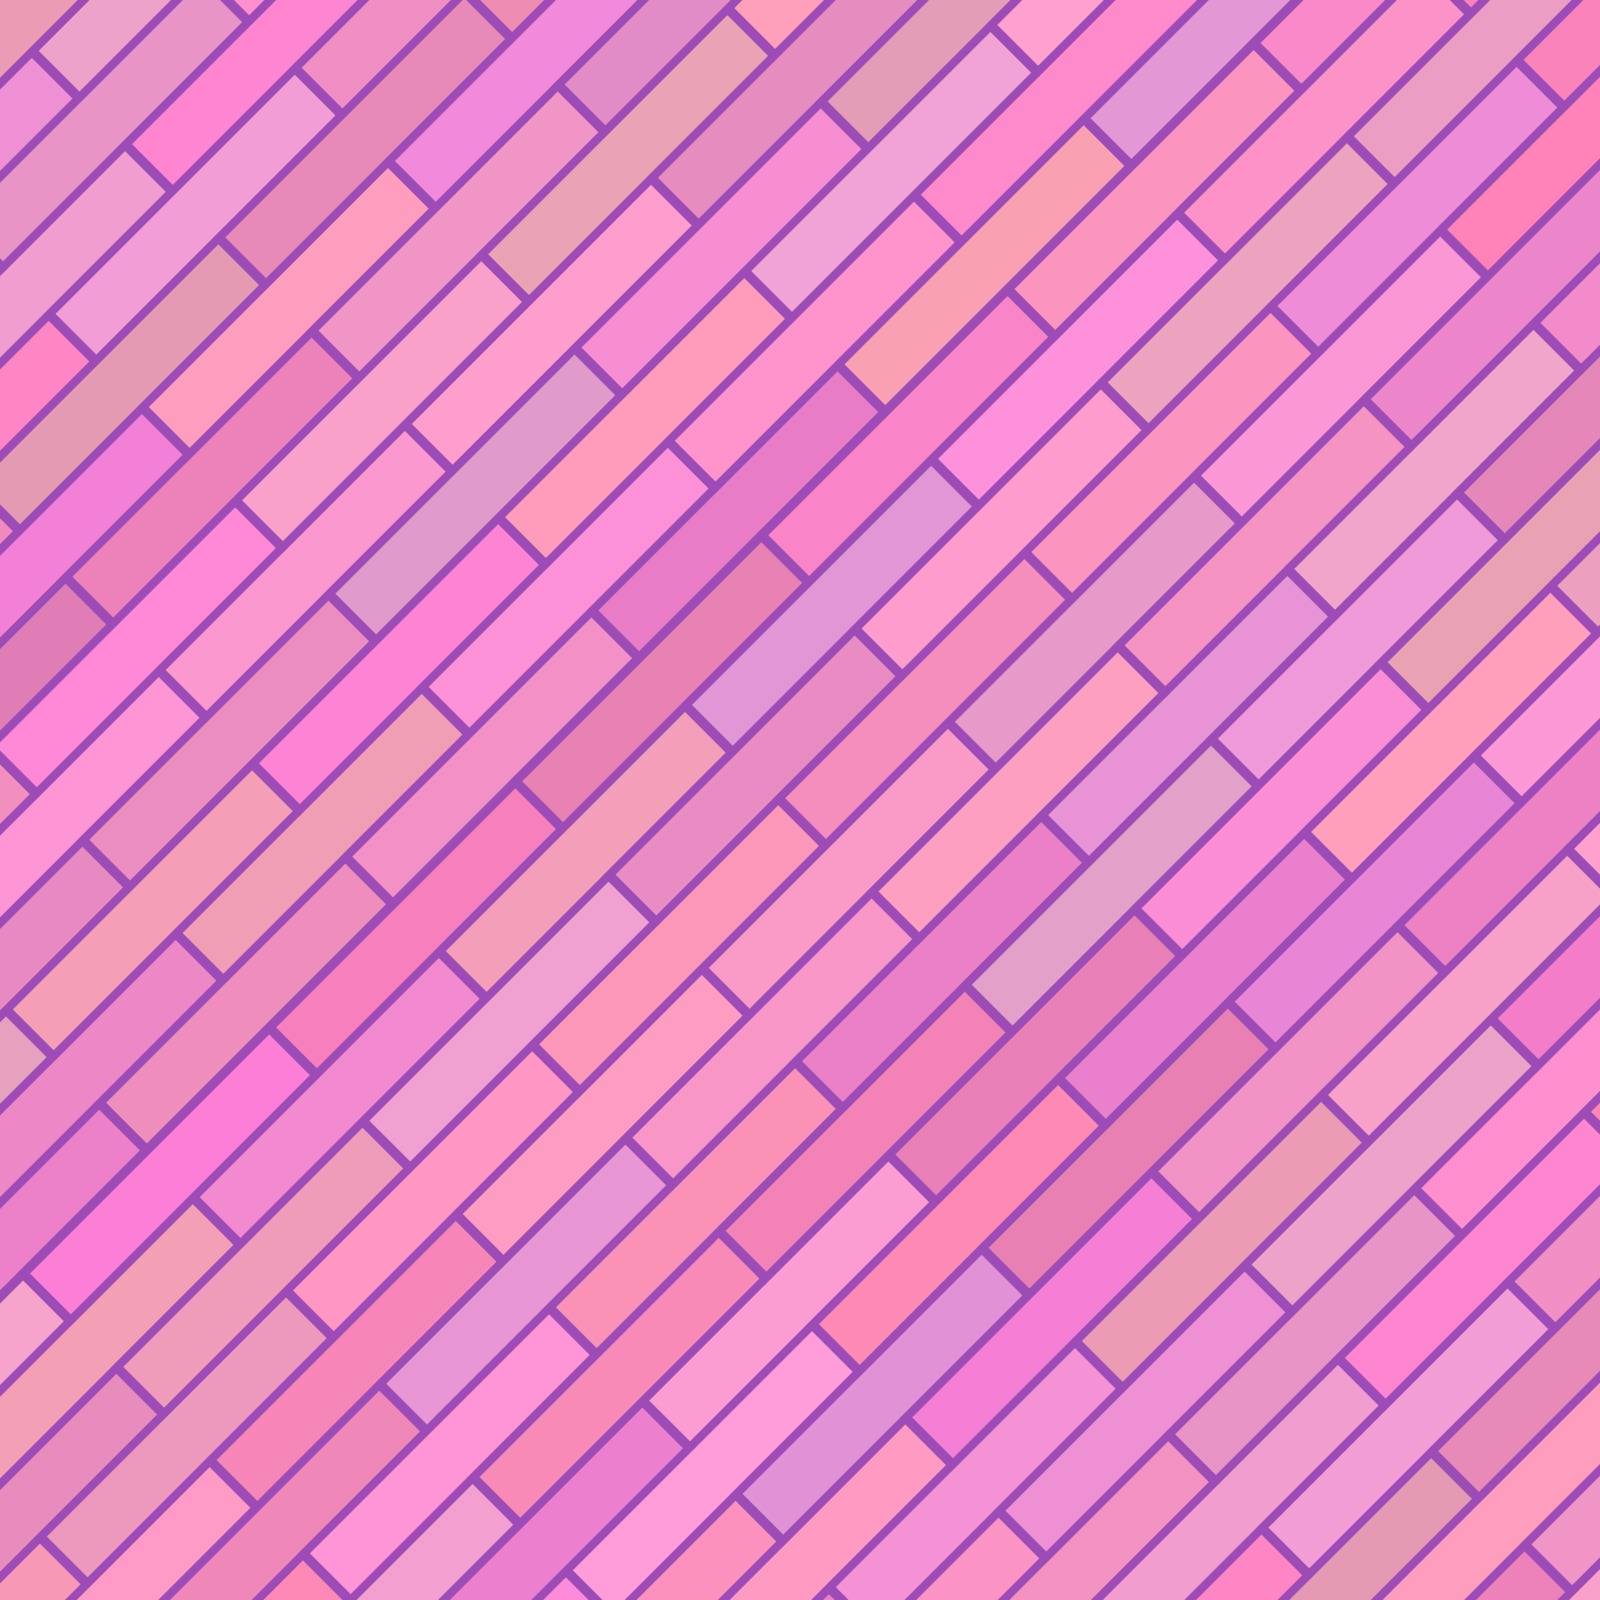 Pink Diagonal Texture. Abstract Pink Brick Background.